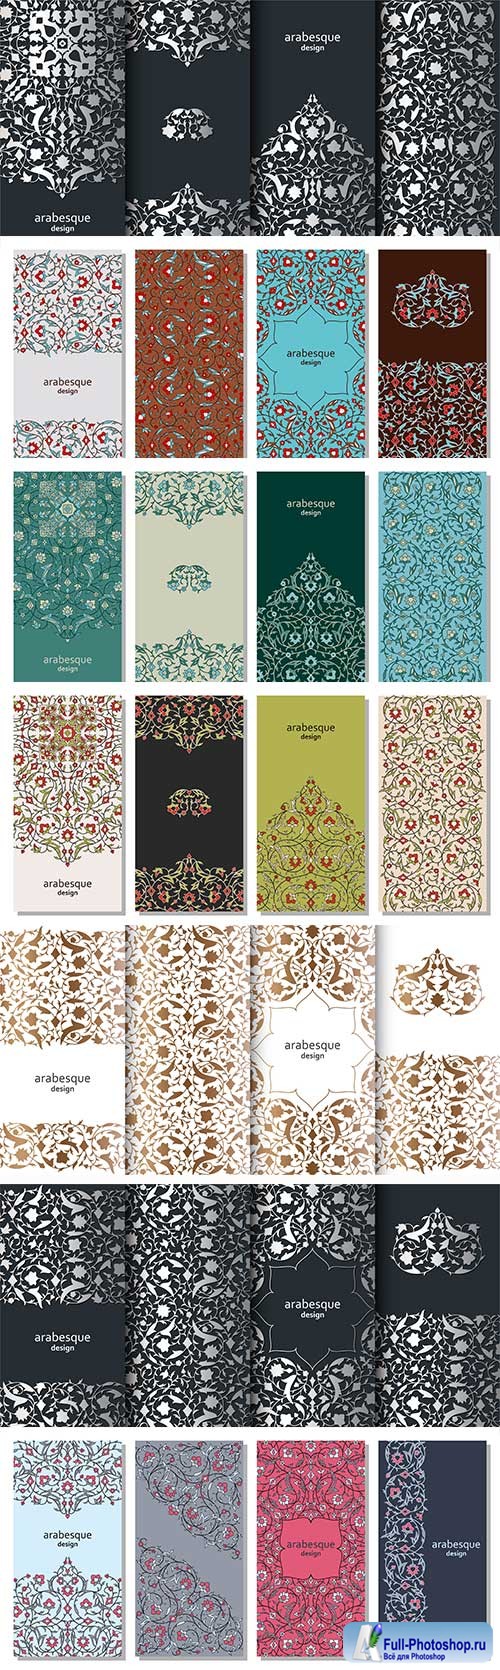 Vertical arabesque vector floral banners